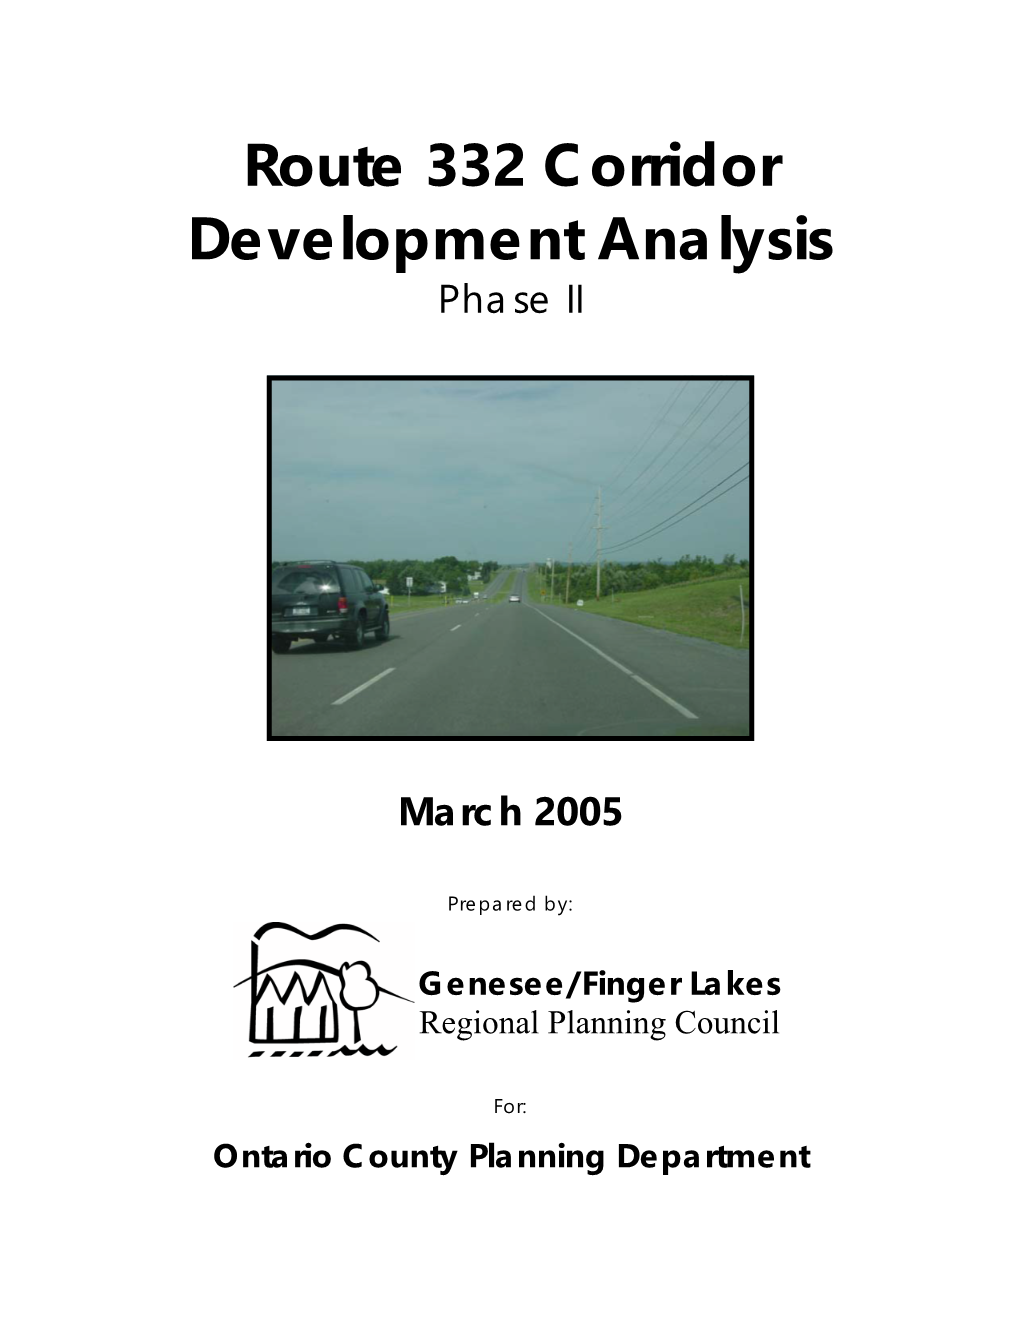 Route 332 Corridor Development Analysis Phase II